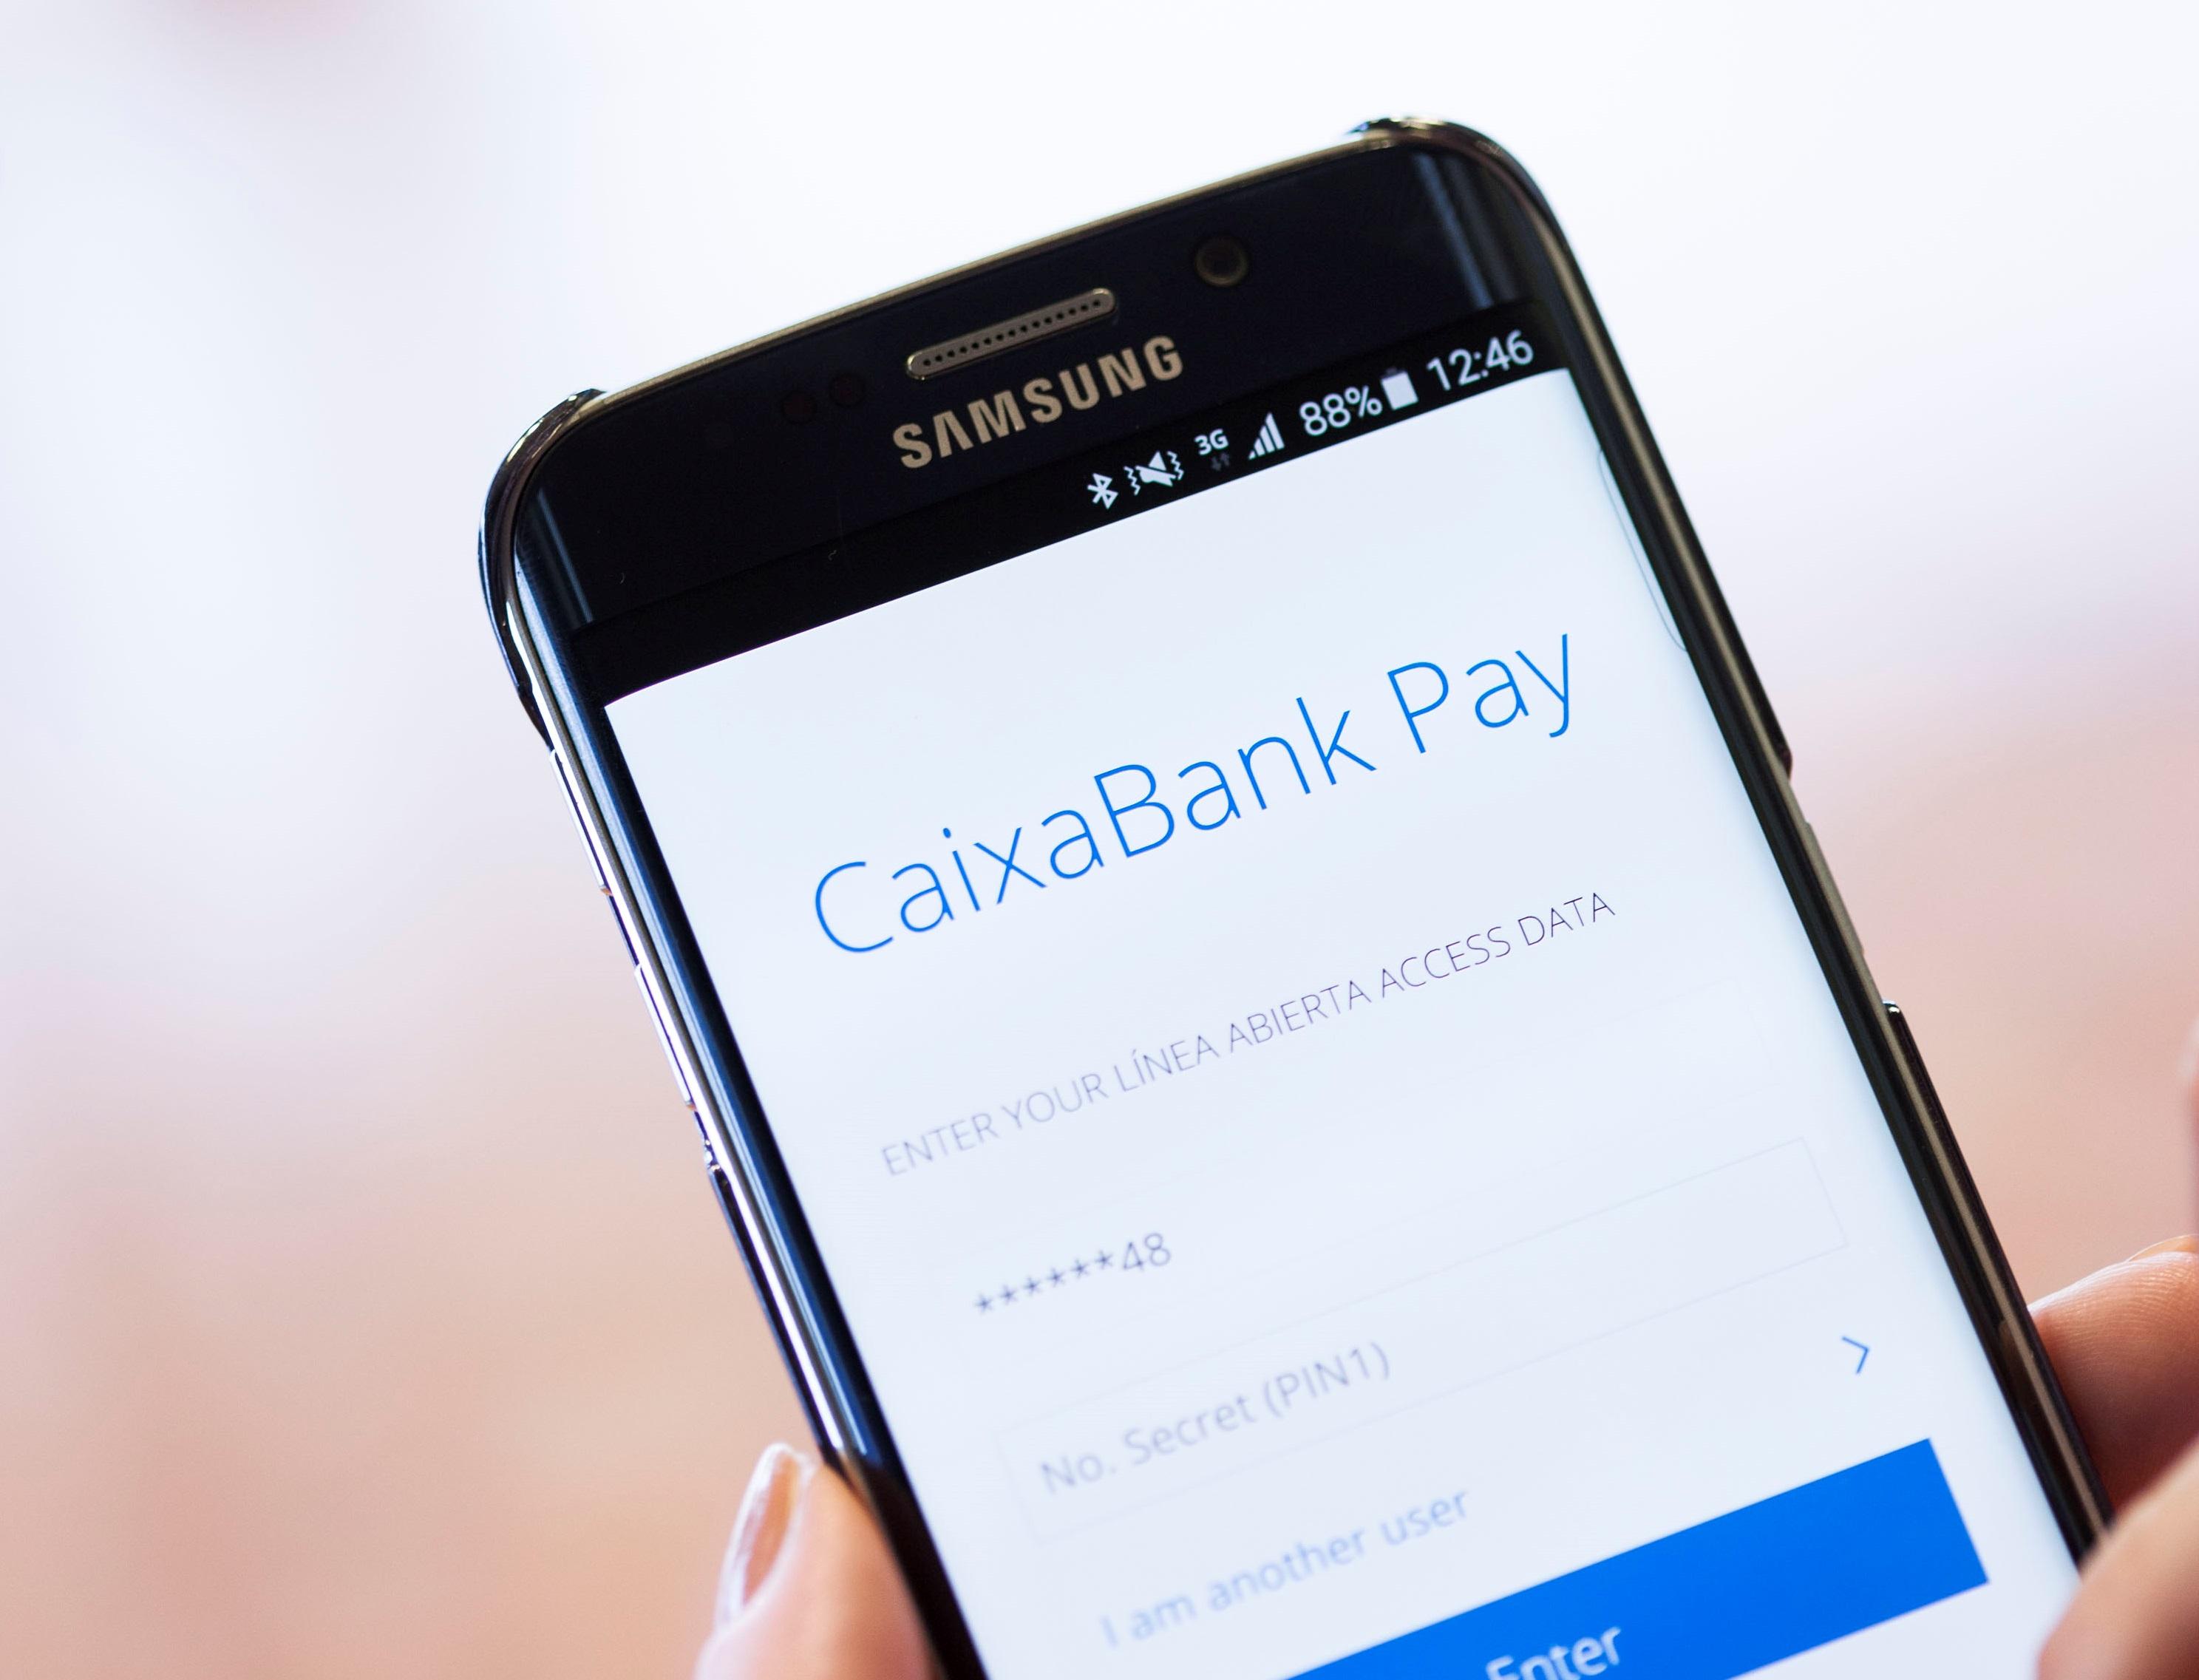 Caixabank Pay